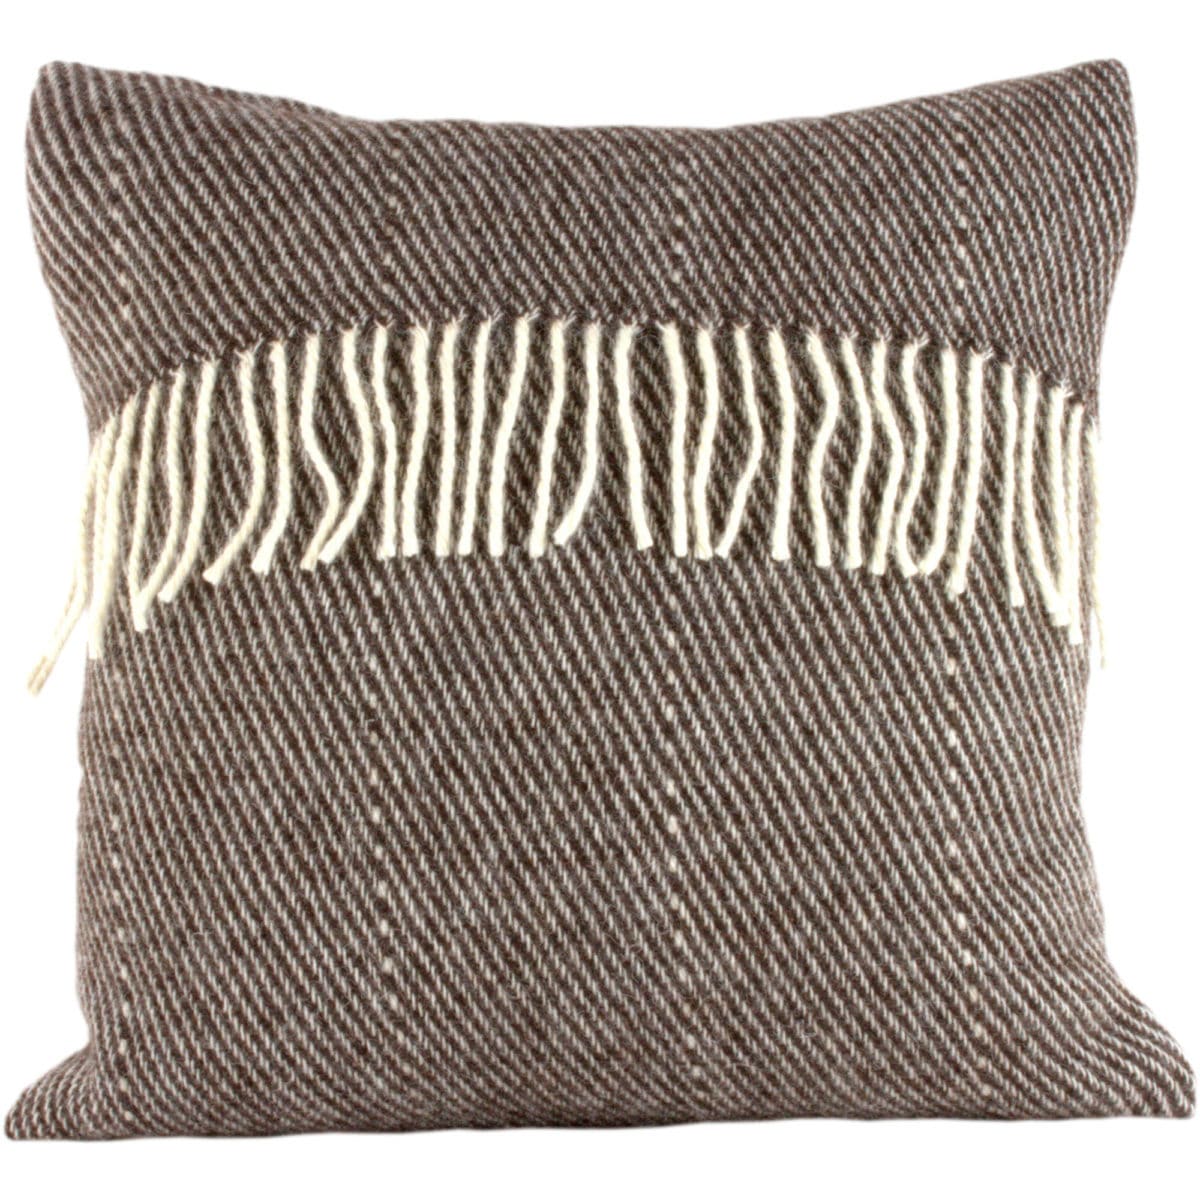 Romney Marsh Wool Cushion - Black Thorn - 4 sizes